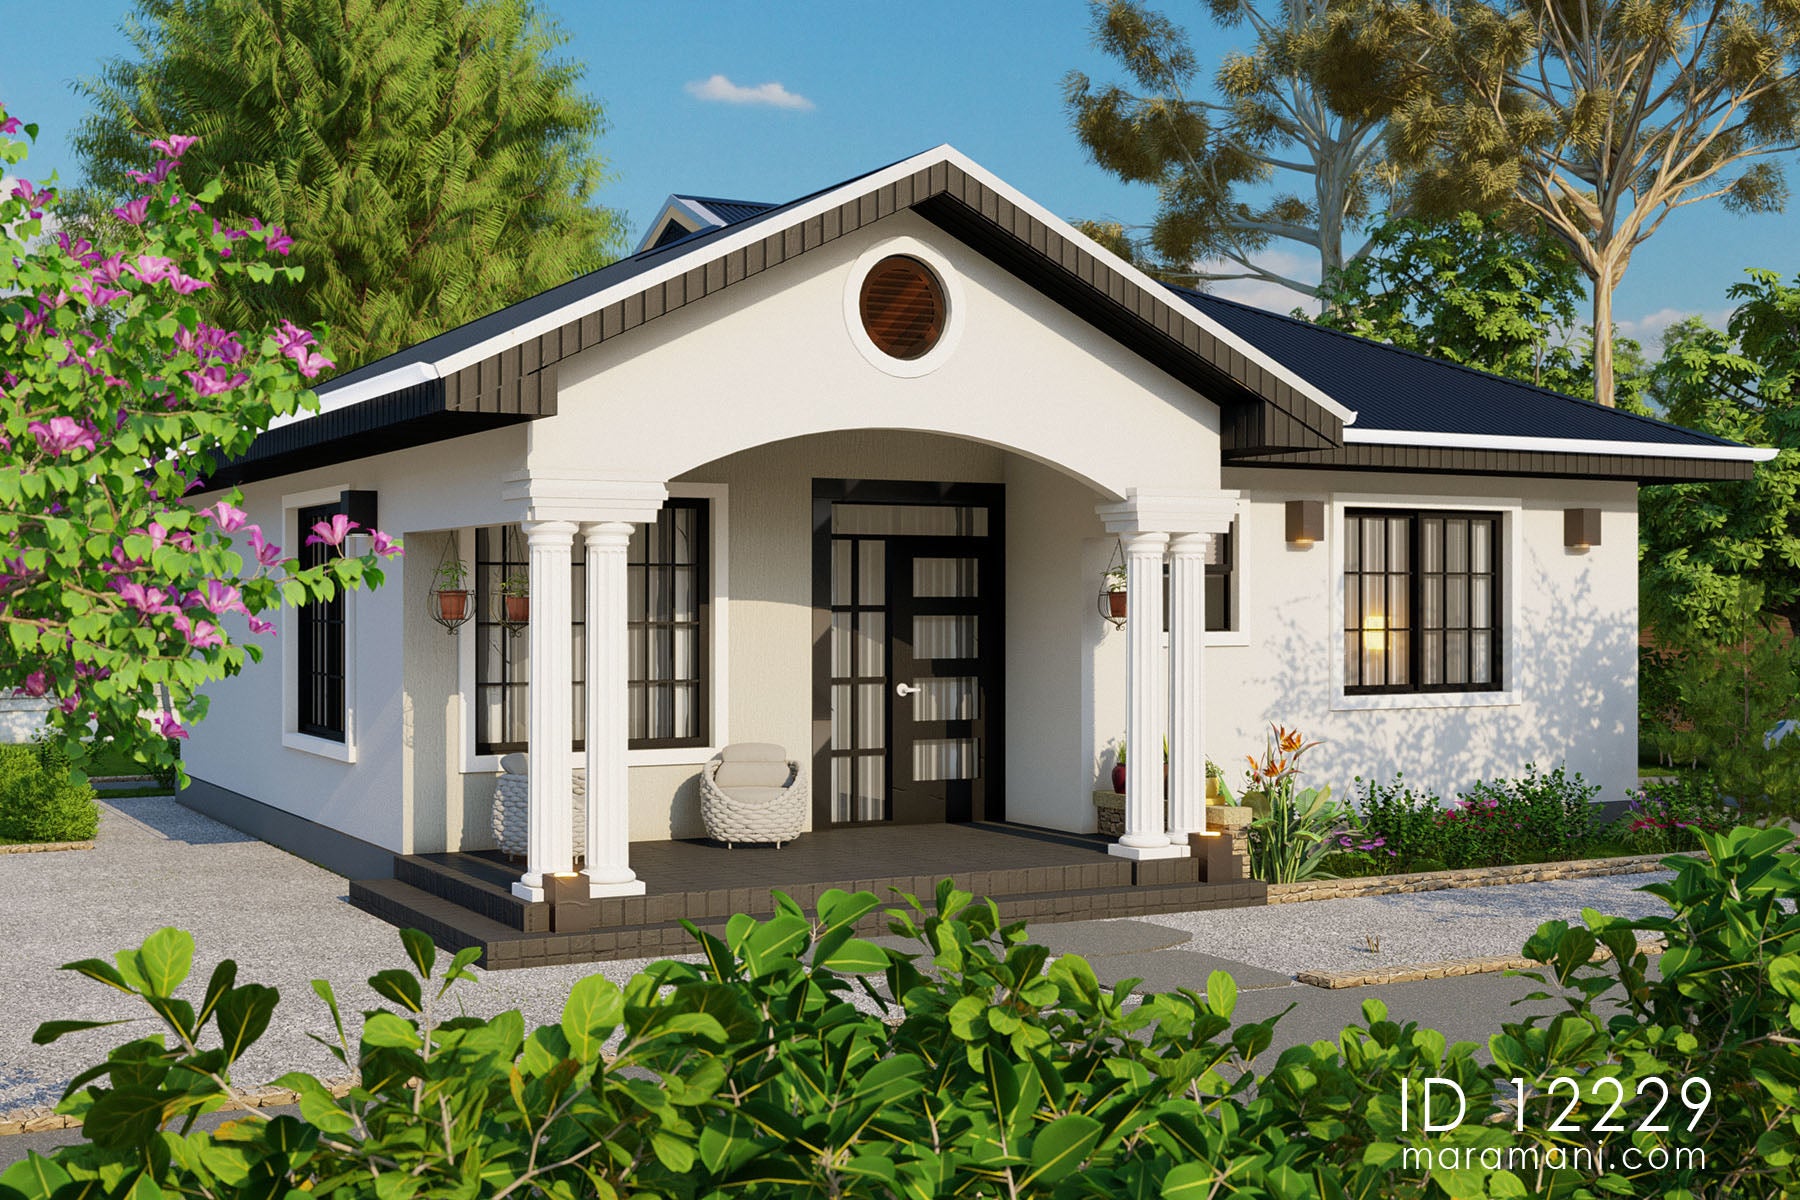 Tanzanian 2-Bedroom House Plan - ID 12229